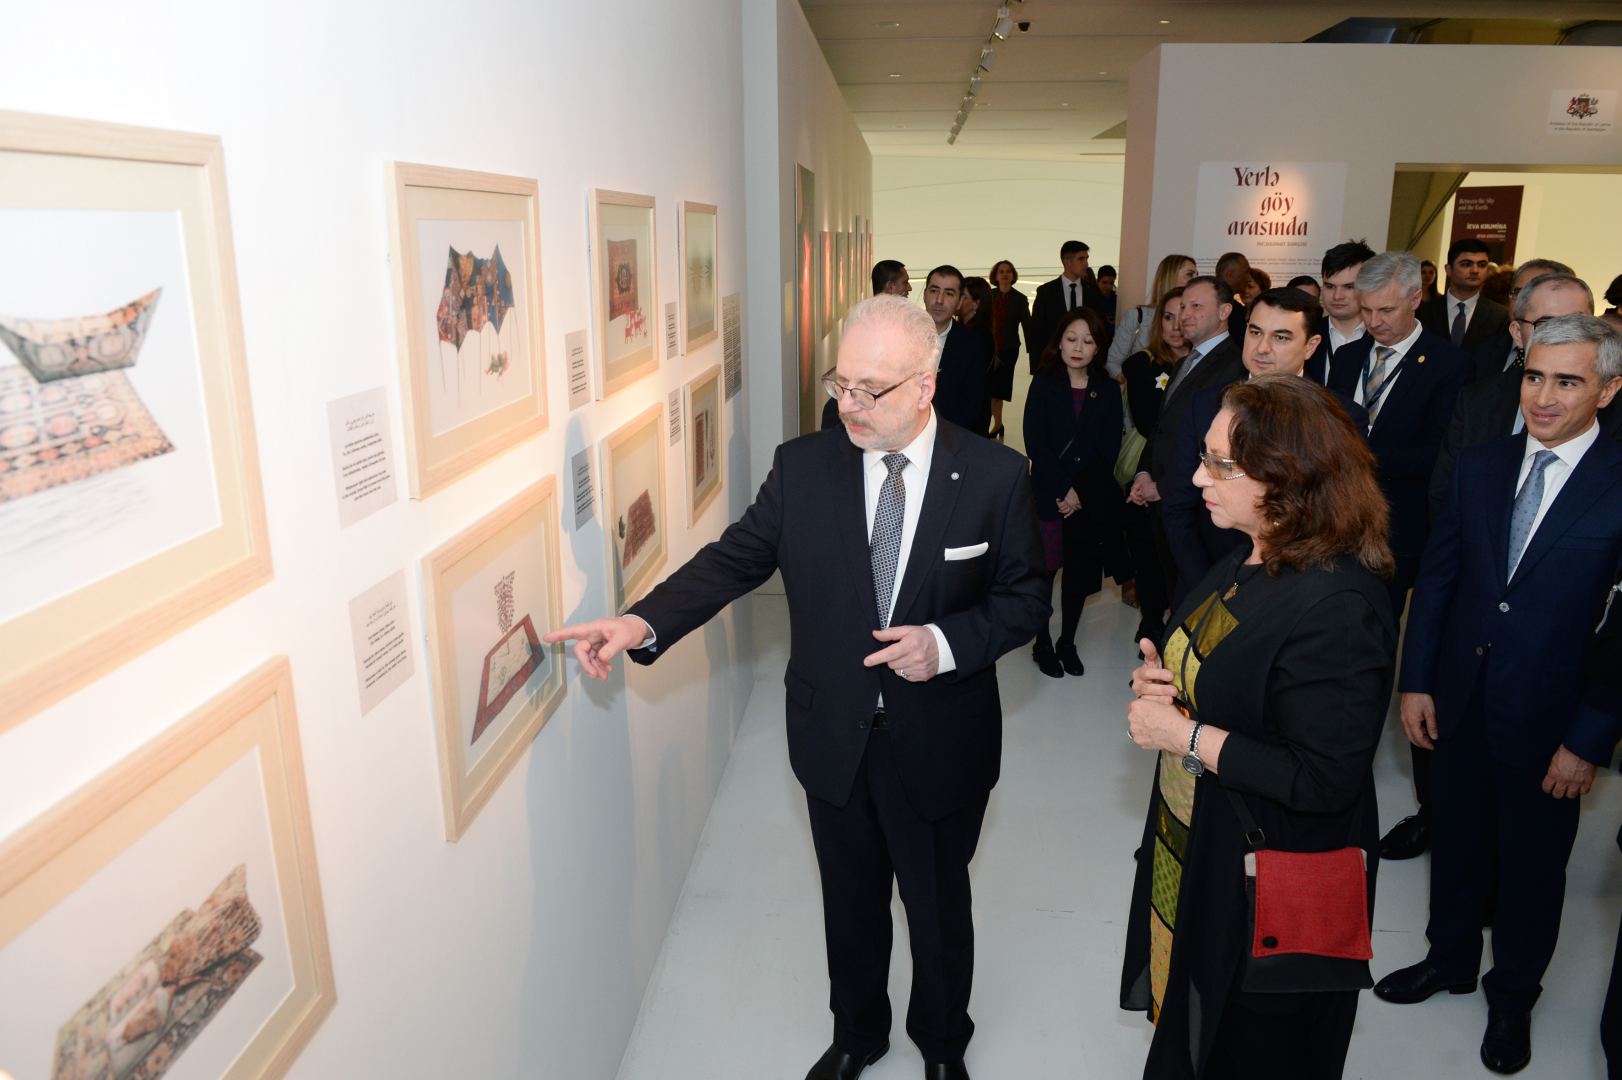 'Between Heaven and Earth' exhibition opened at Heydar Aliyev Center in Baku (PHOTO)